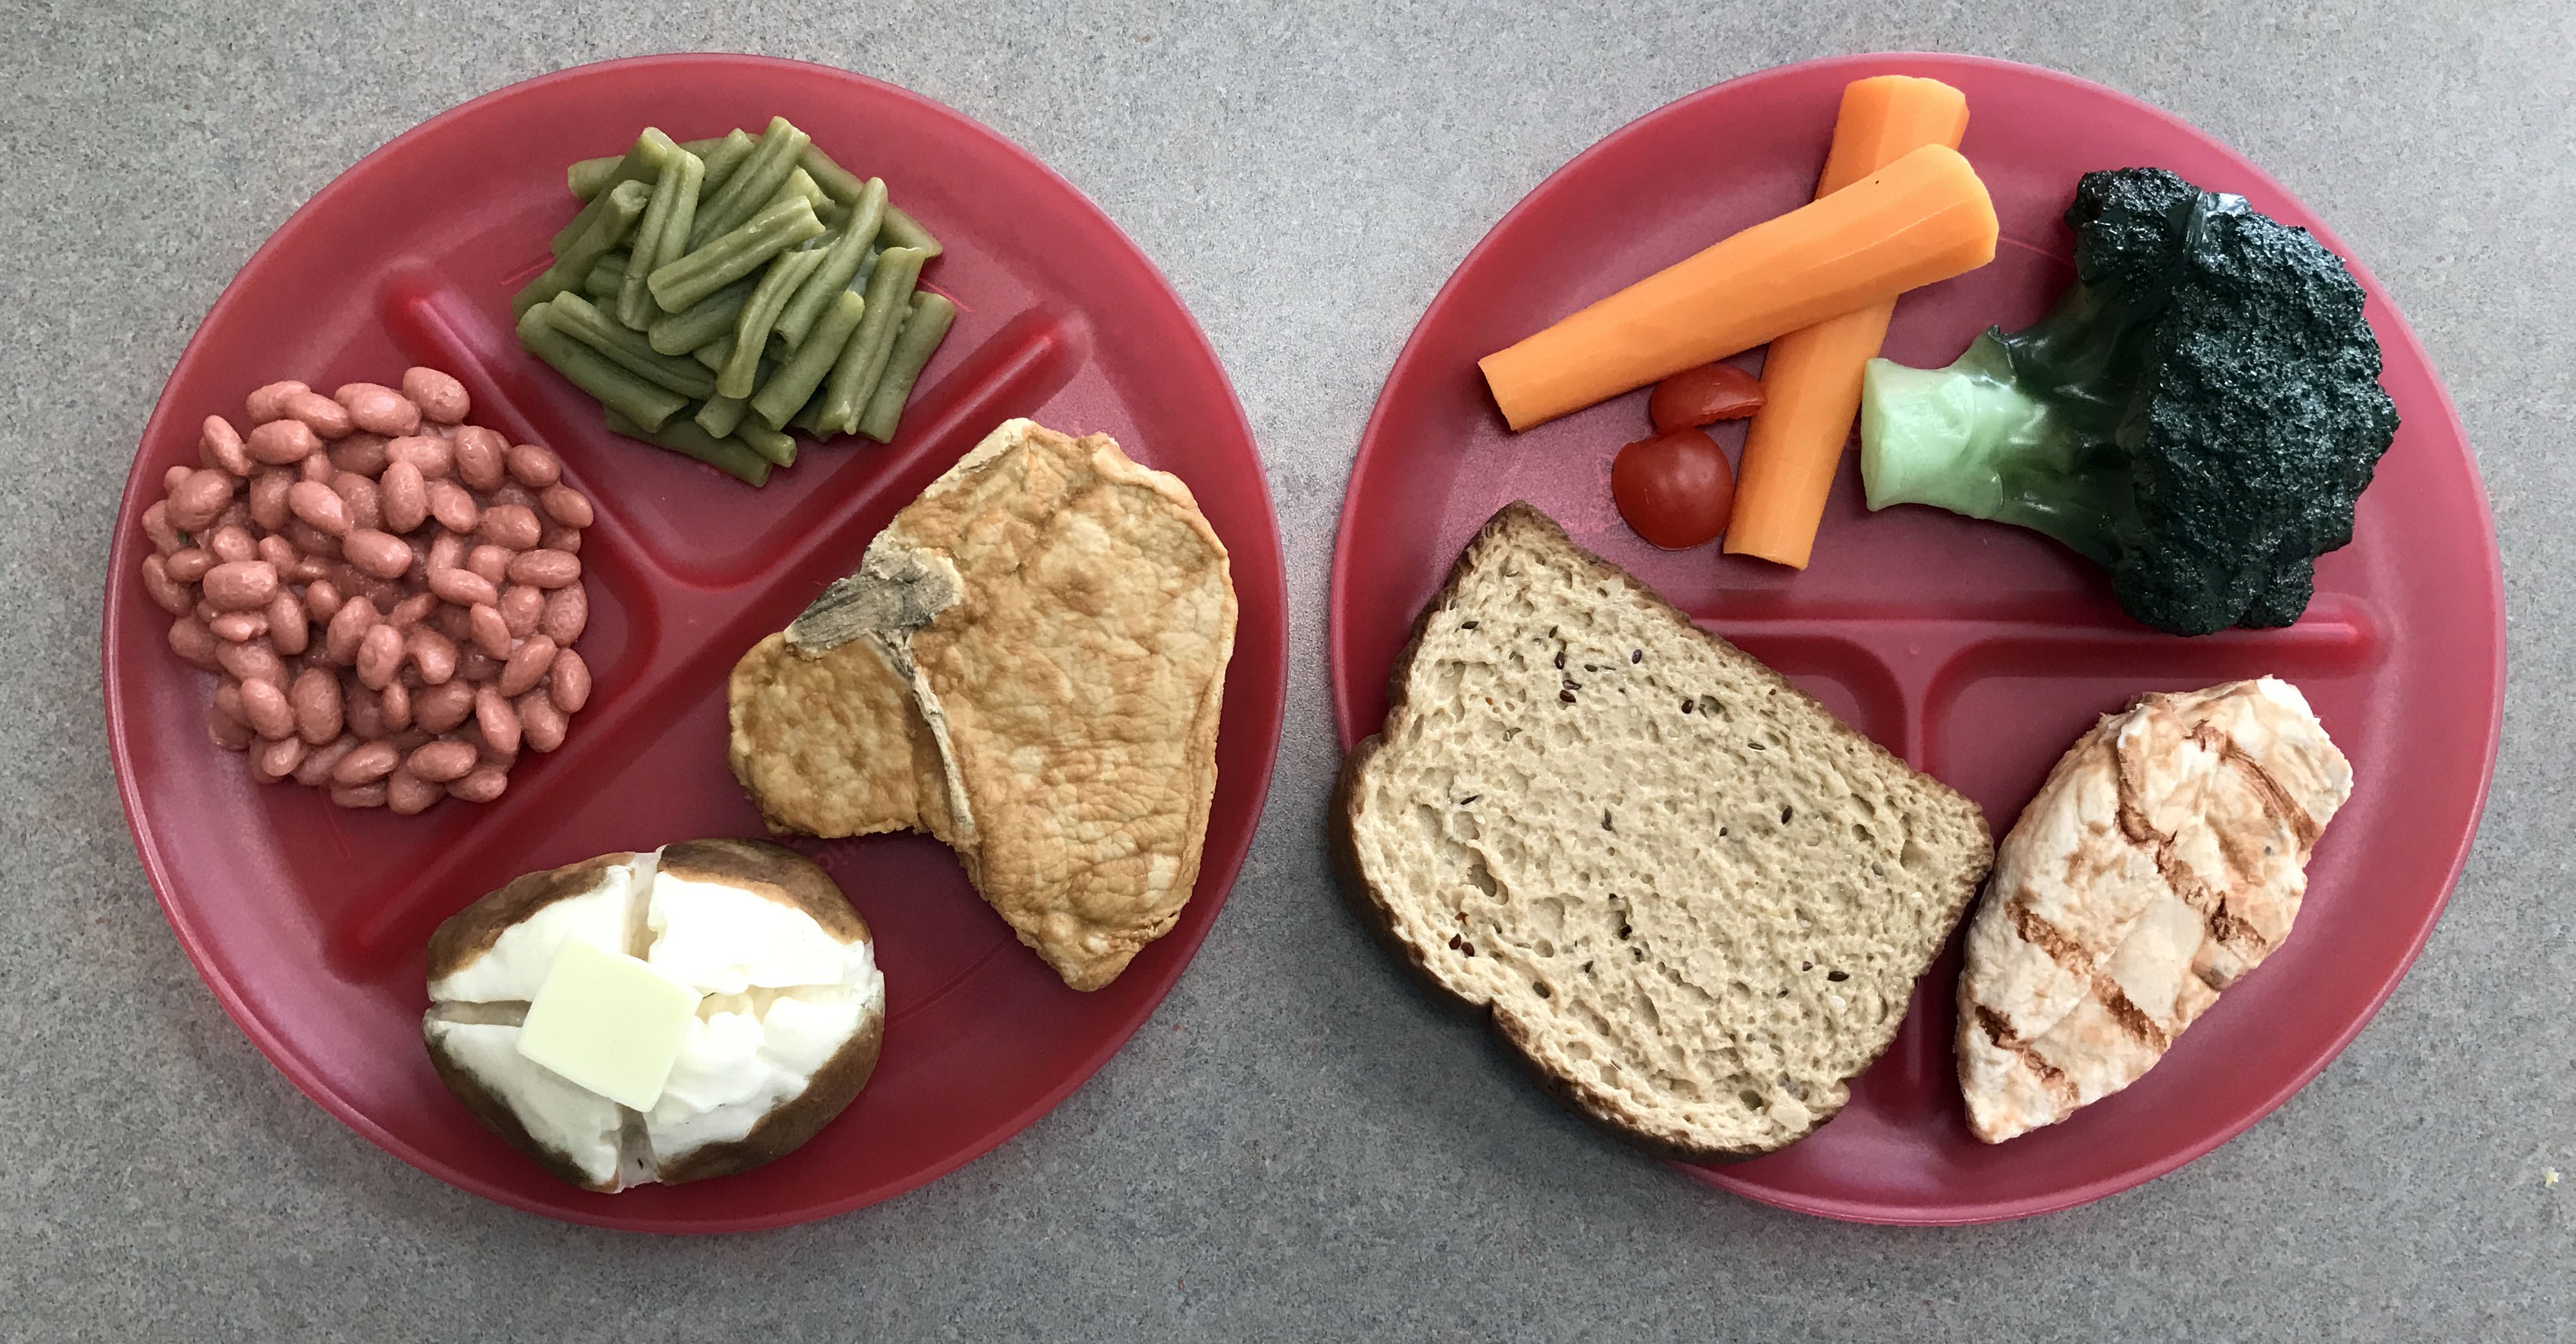 Healthy Living Food Plate